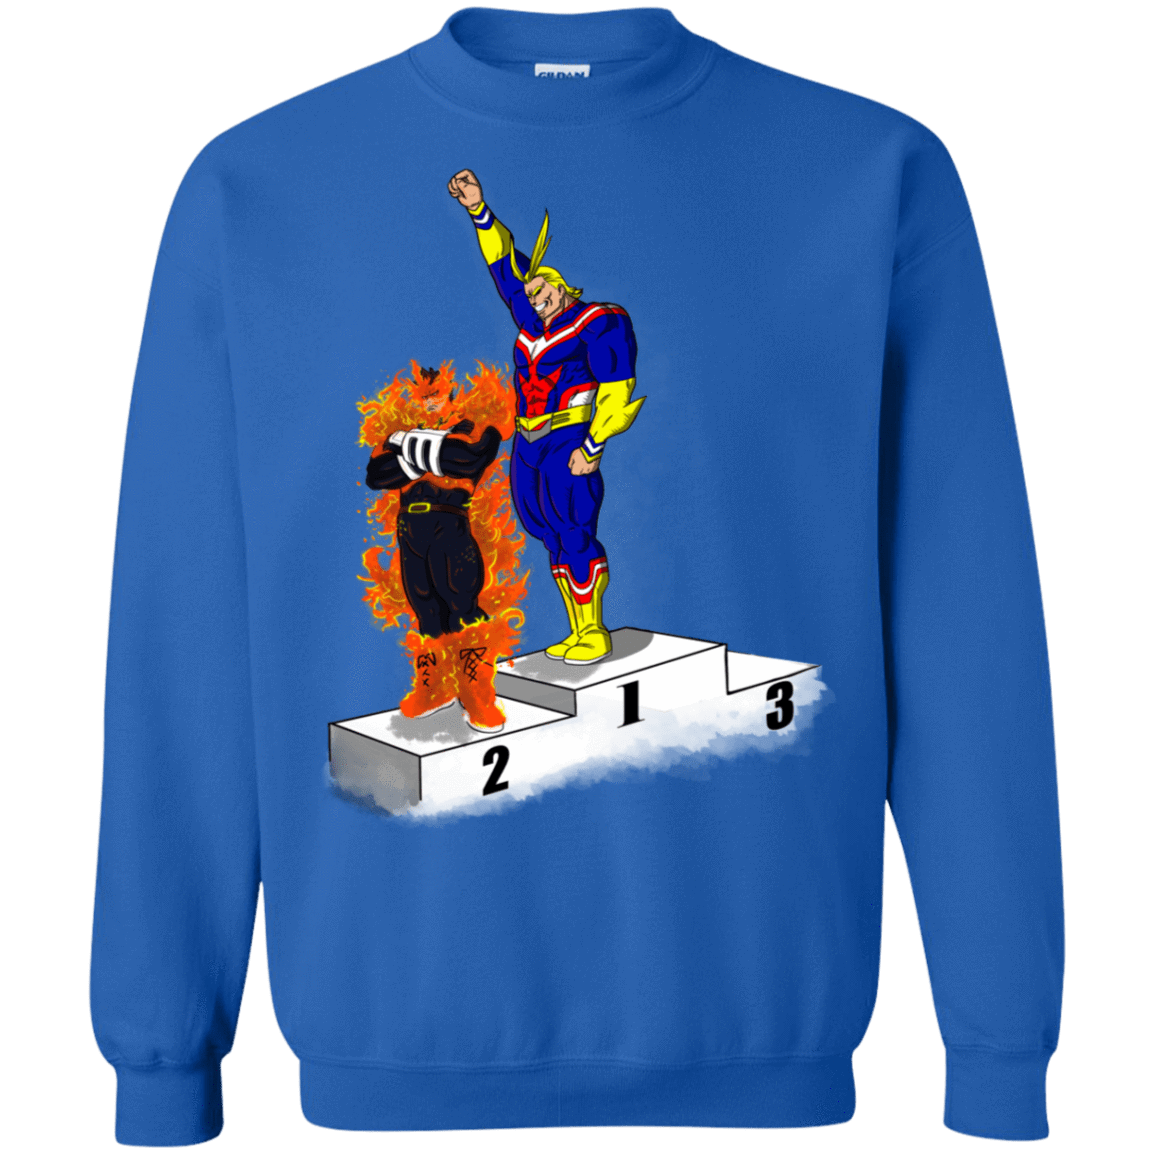 Sweatshirts Royal / S Number One Crewneck Sweatshirt